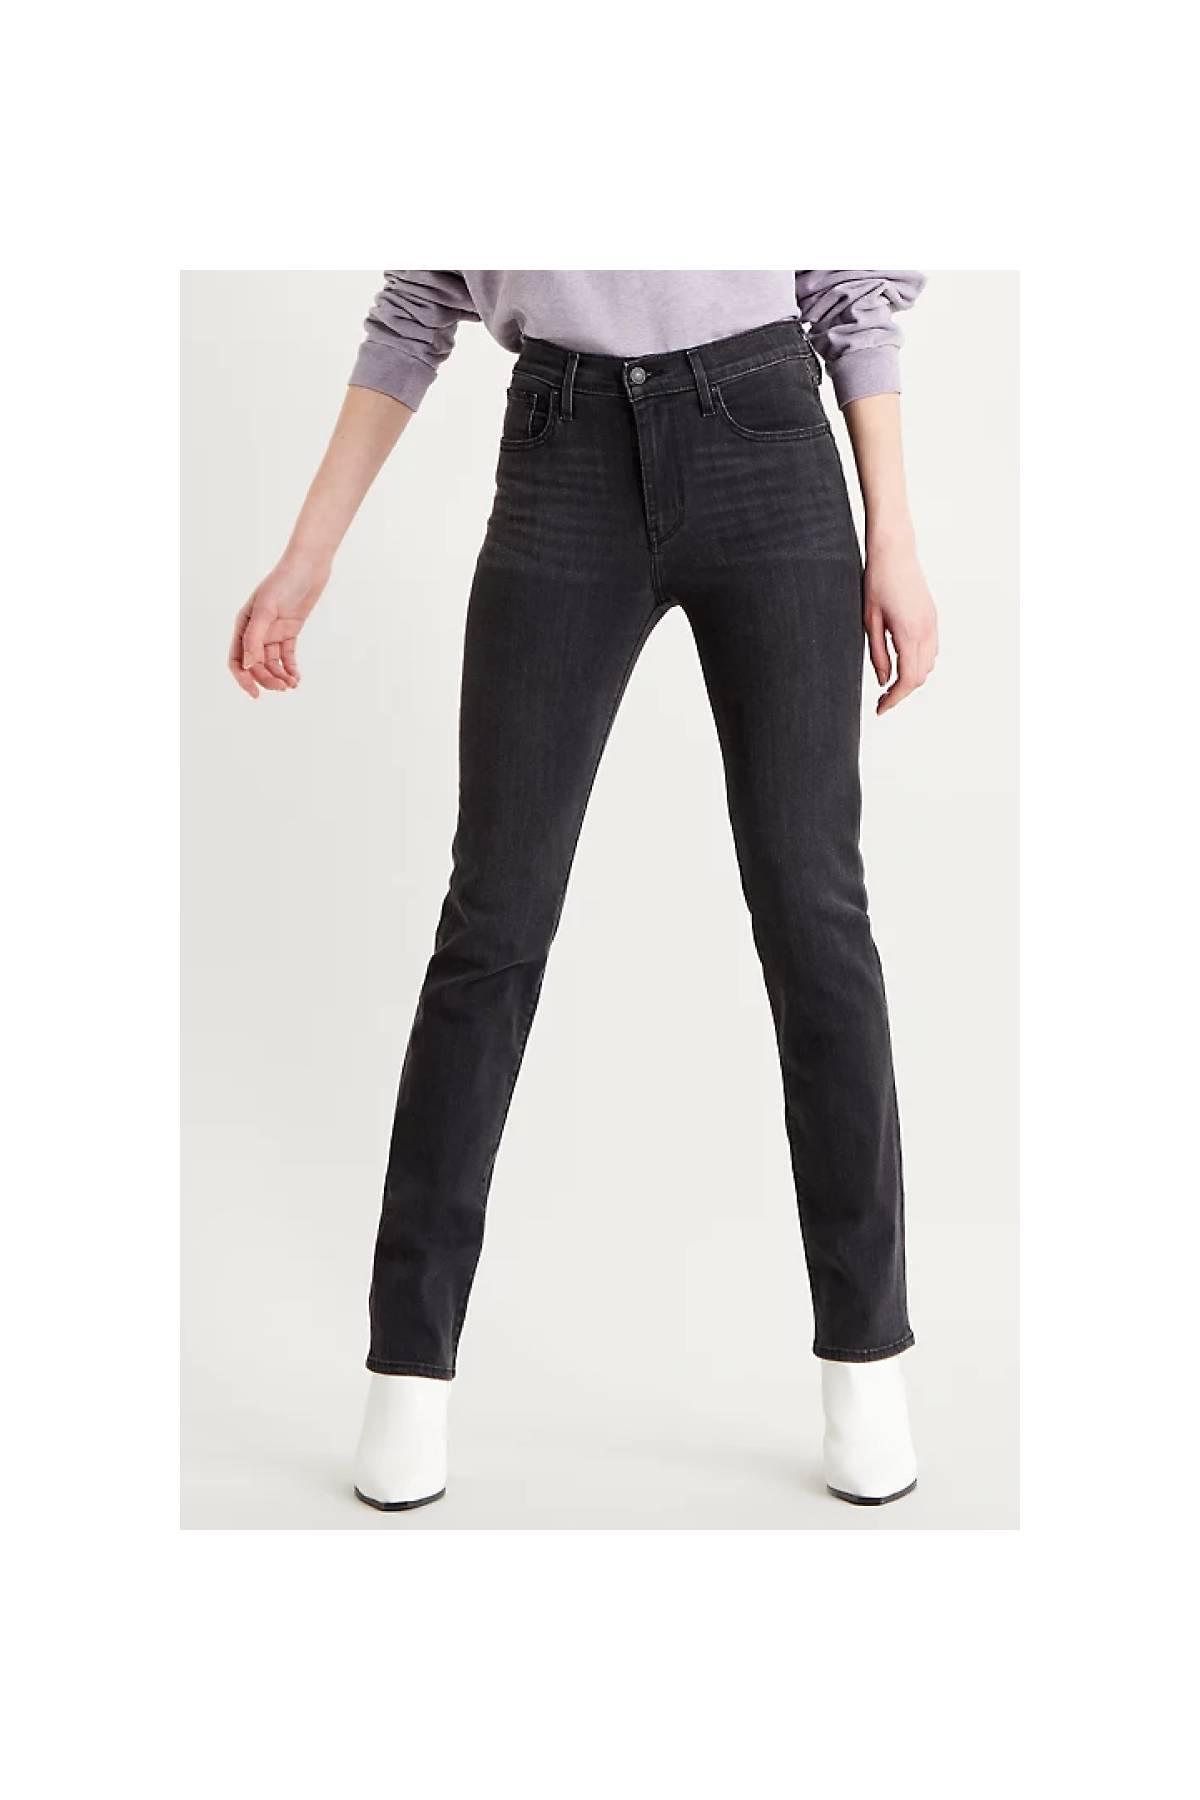 Model wearing mile high super skinny jeans